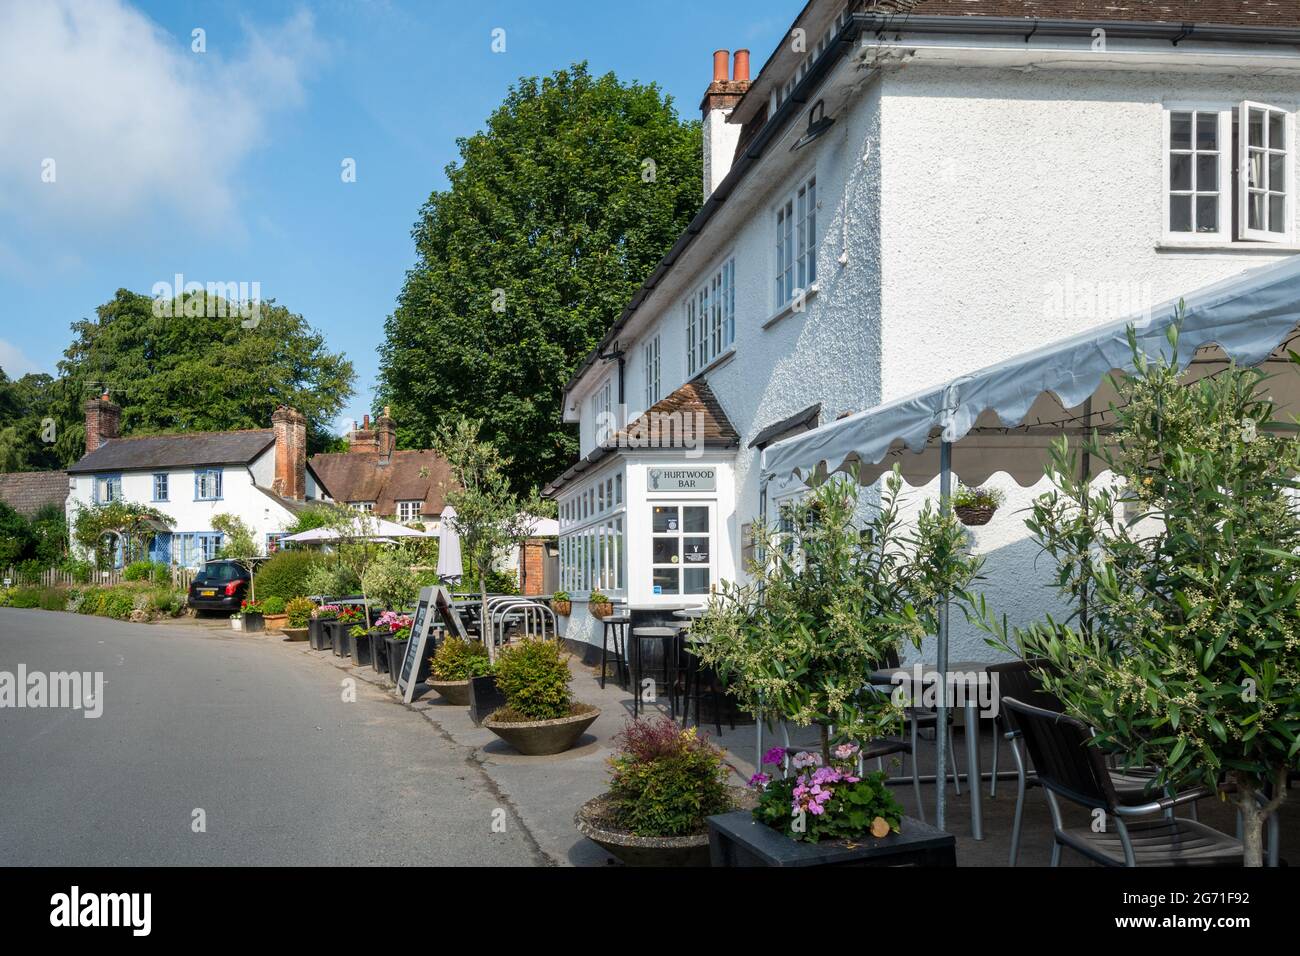 Peaslake, a pretty village in the Surrey Hills AONB, England, UK Stock Photo